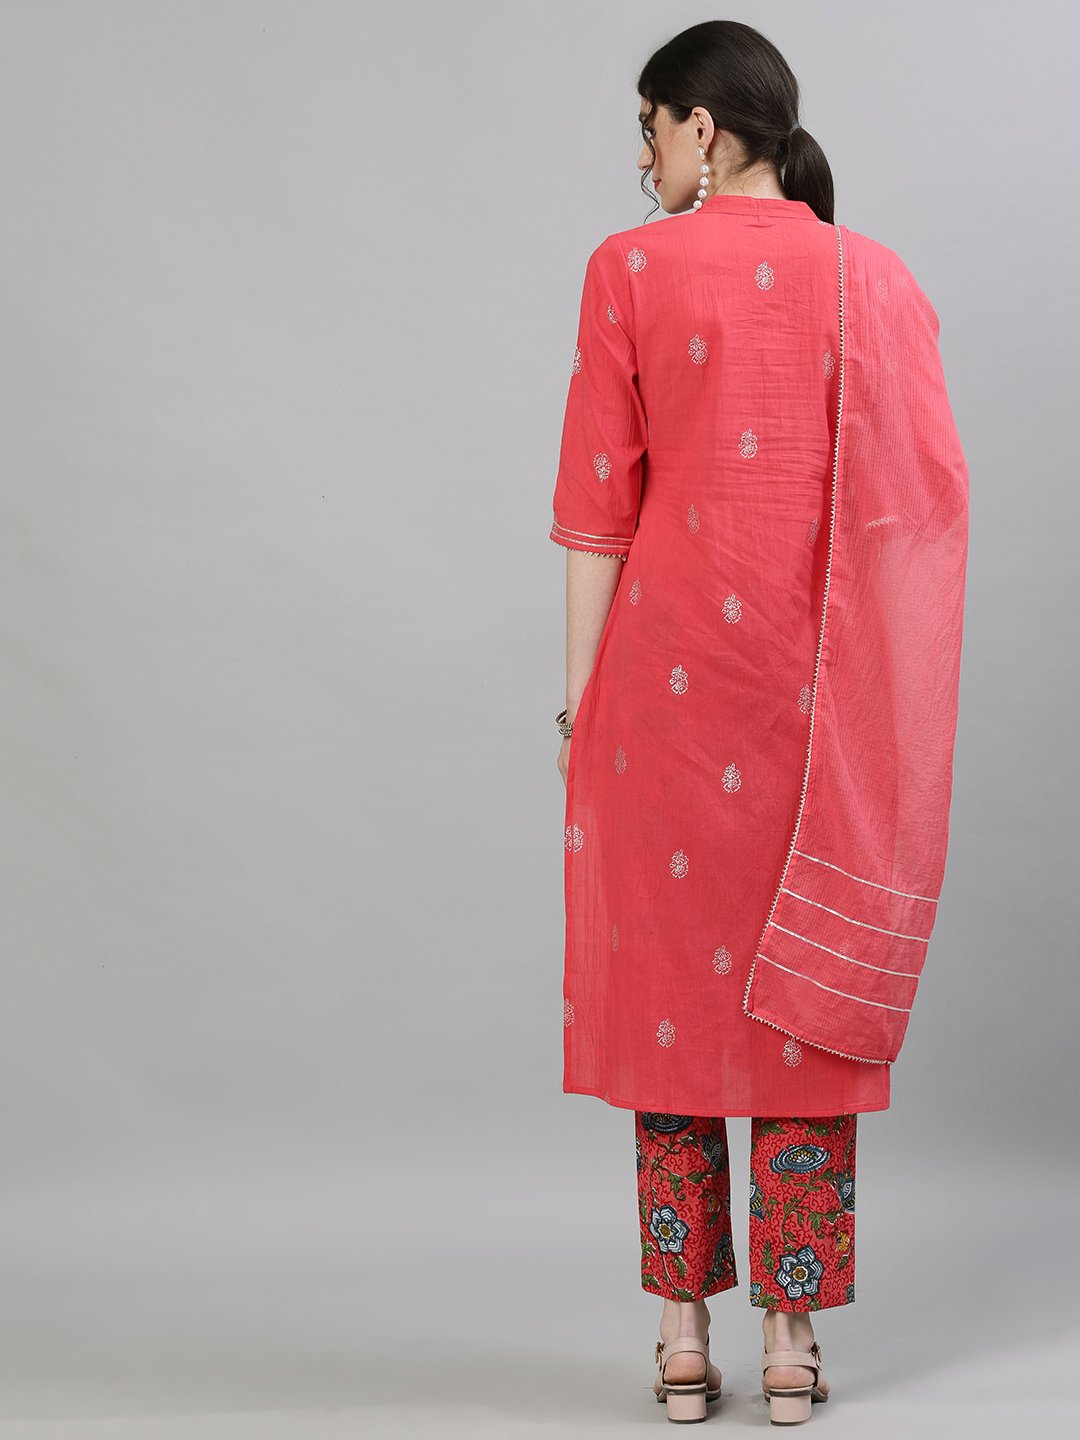 Ishin Women's Cotton Pink Embellished Straight Kurta Trouser Dupatta Set